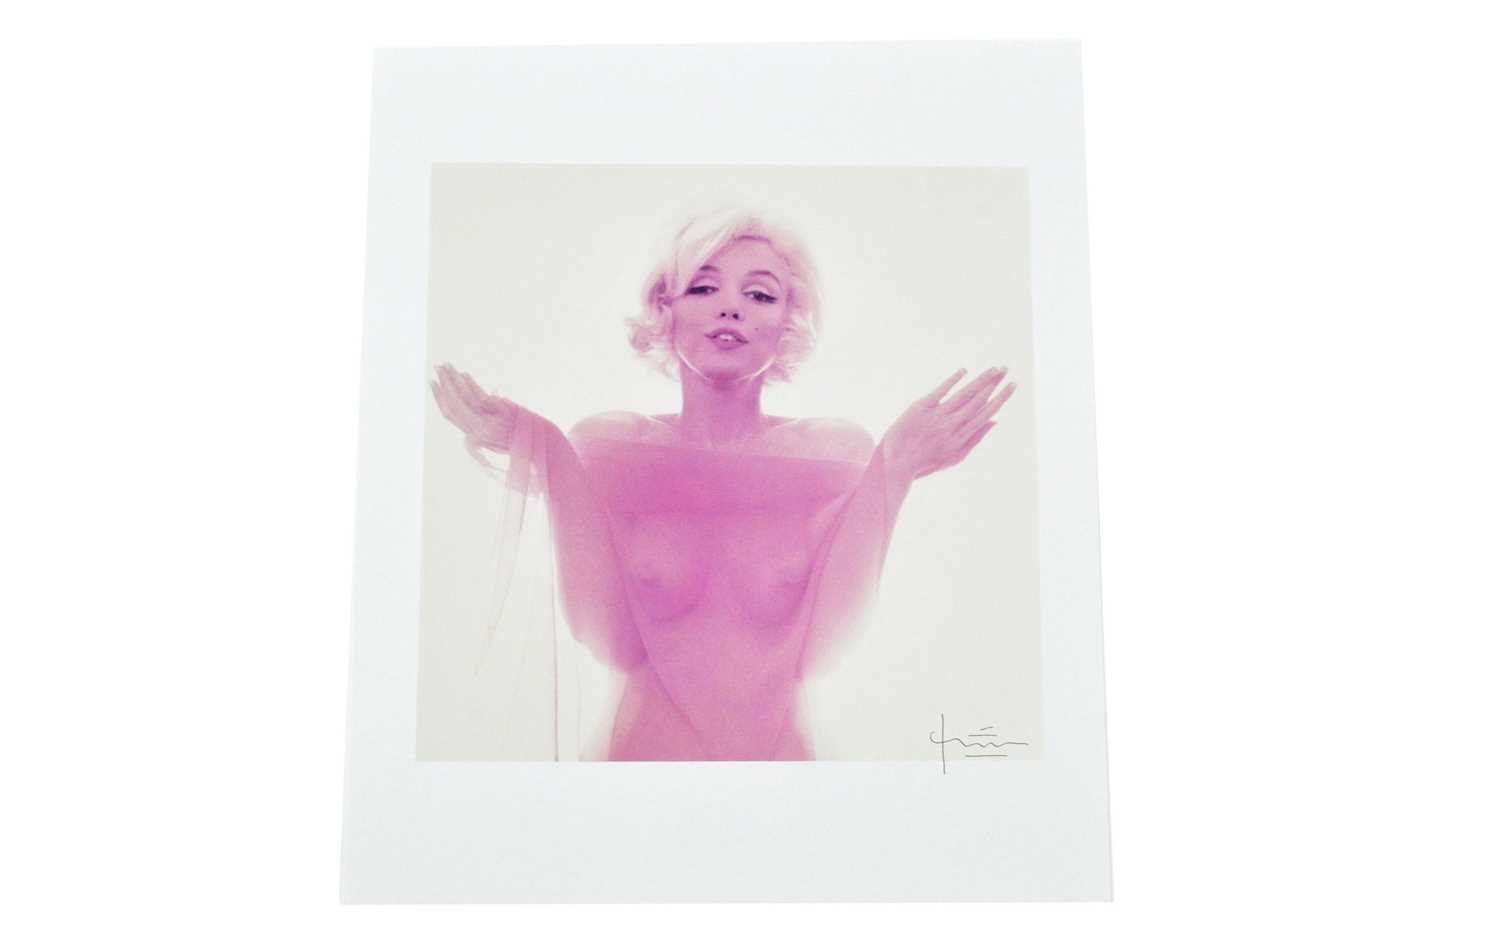 Lot 722 - Bert Stern "I Beg of You" photograph of Marilyn Monroe